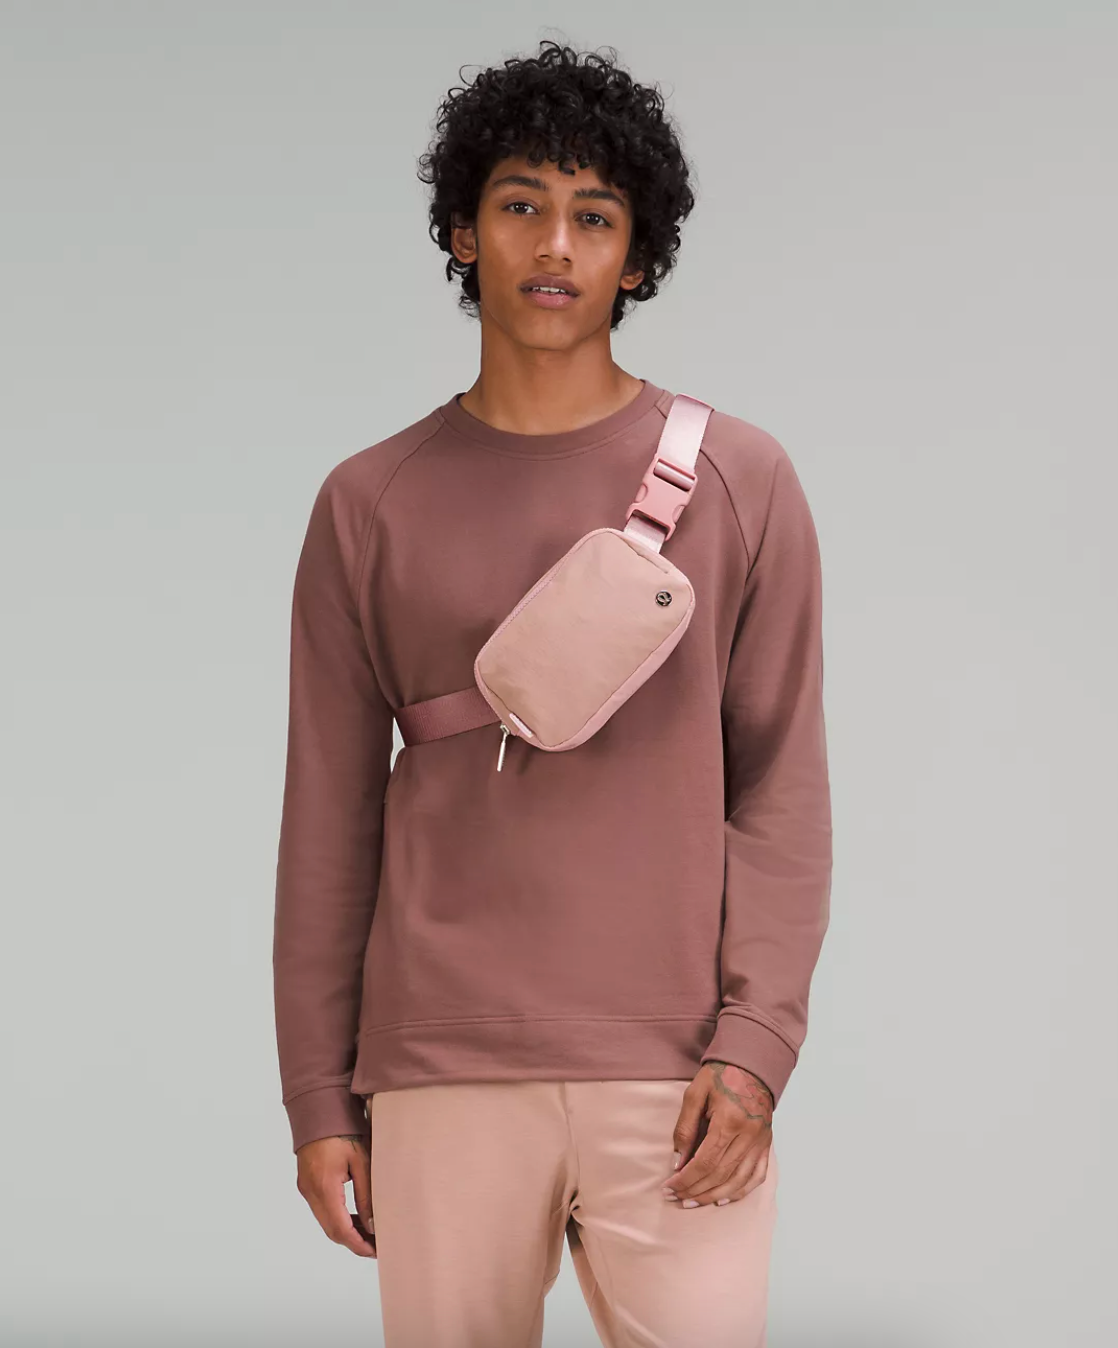 model wearing the light pink belt bag across their chest